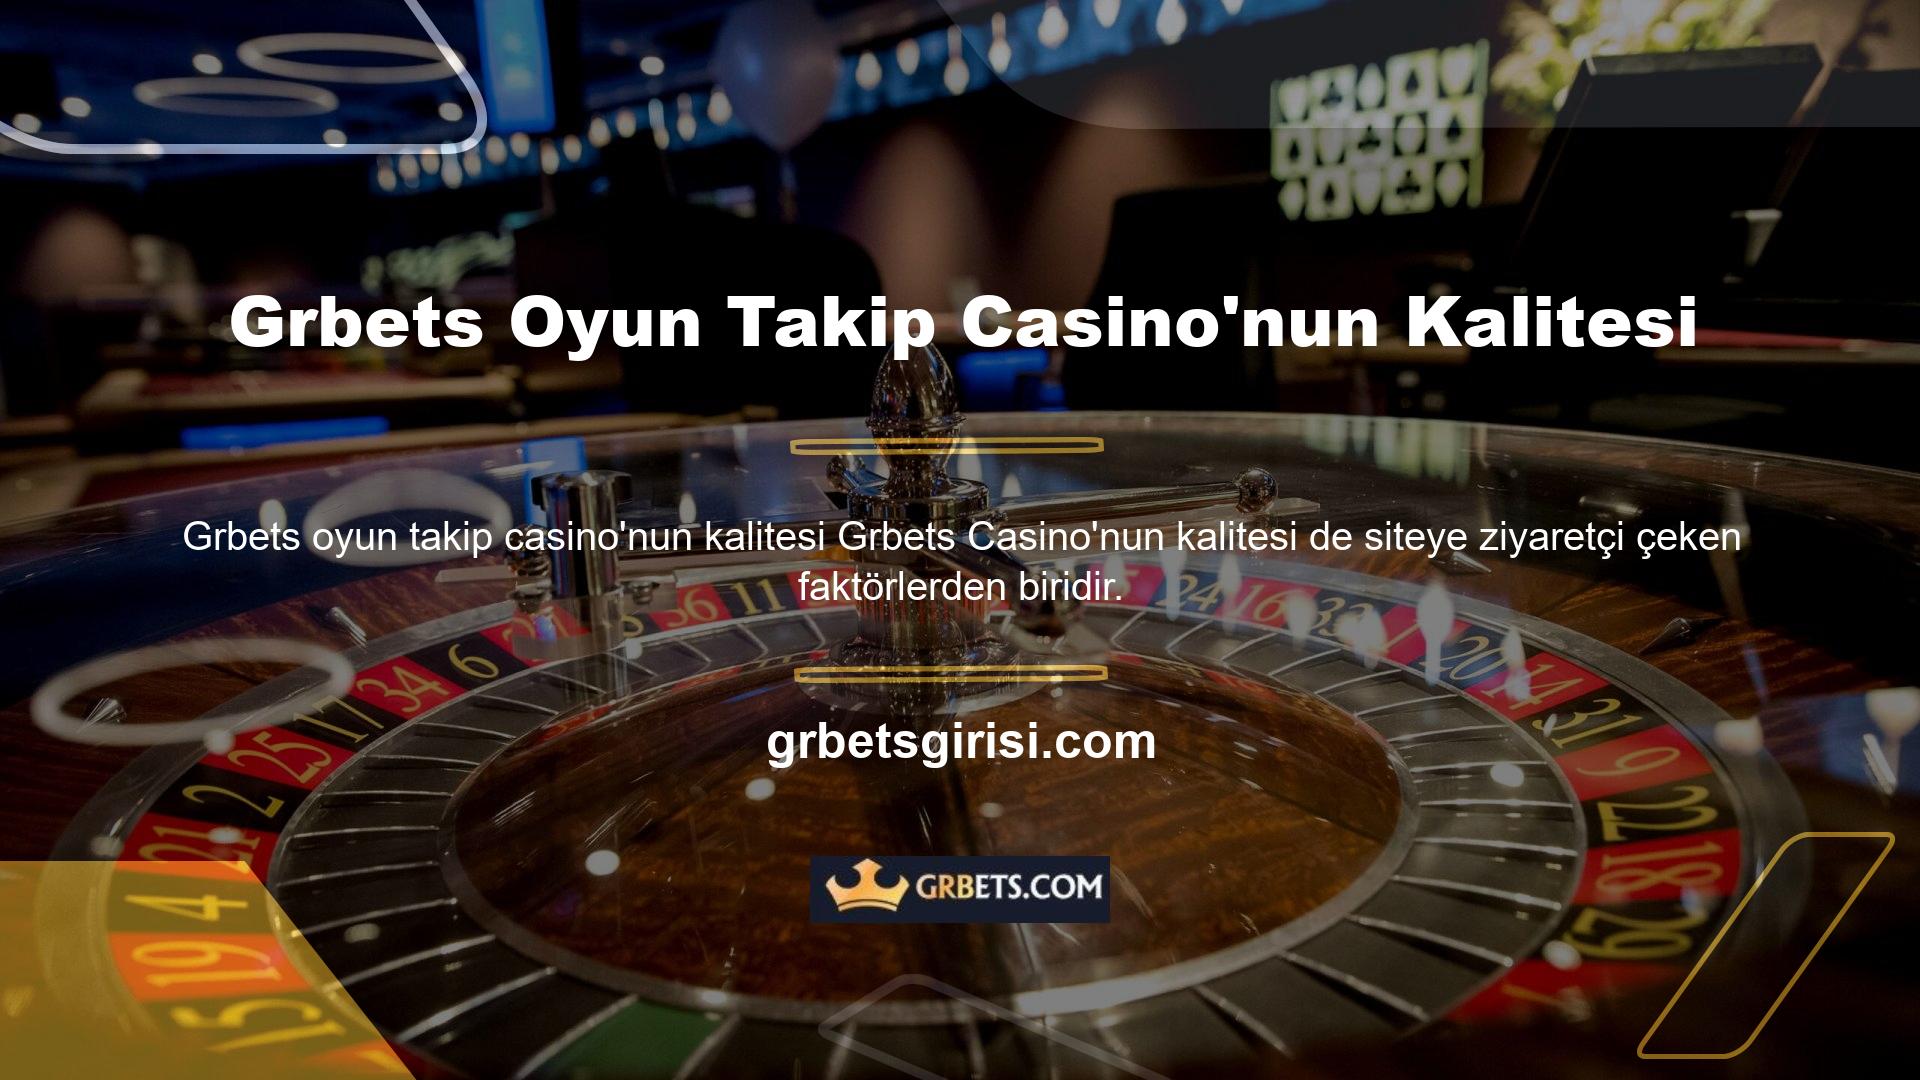 Grbets oyun izleme casino kalitesi